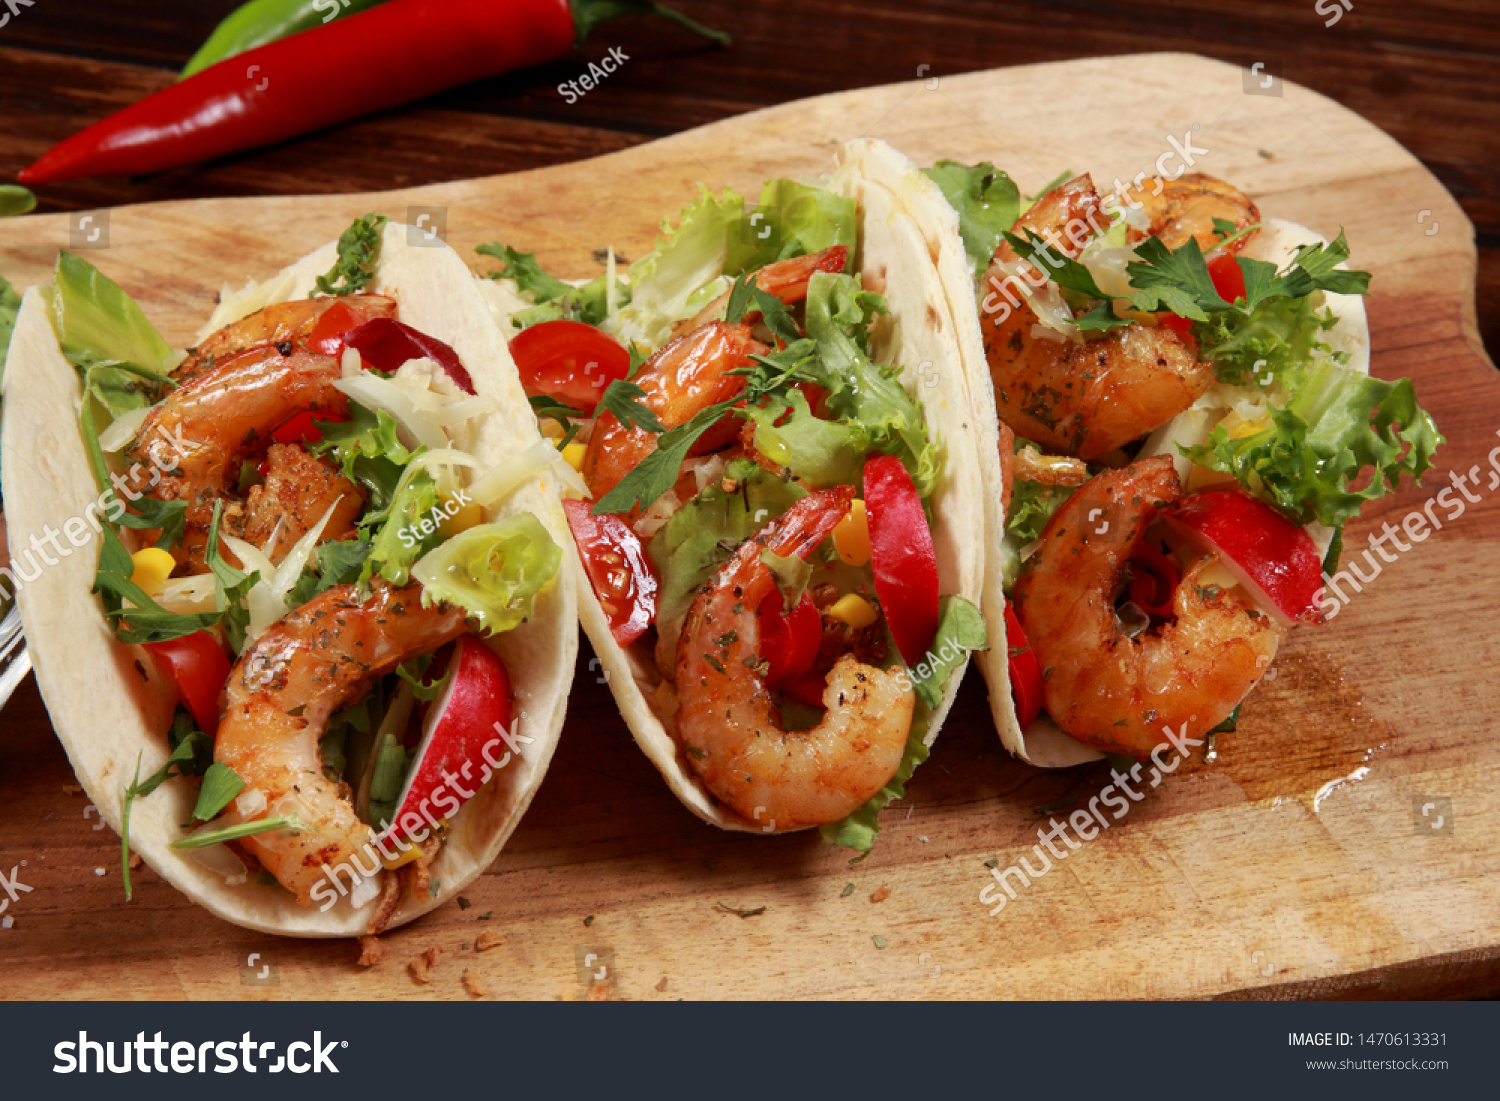 Download Prawn Shrimp Tortilla Wrap Stock Photo Edit Now 1470613331 Yellowimages Mockups